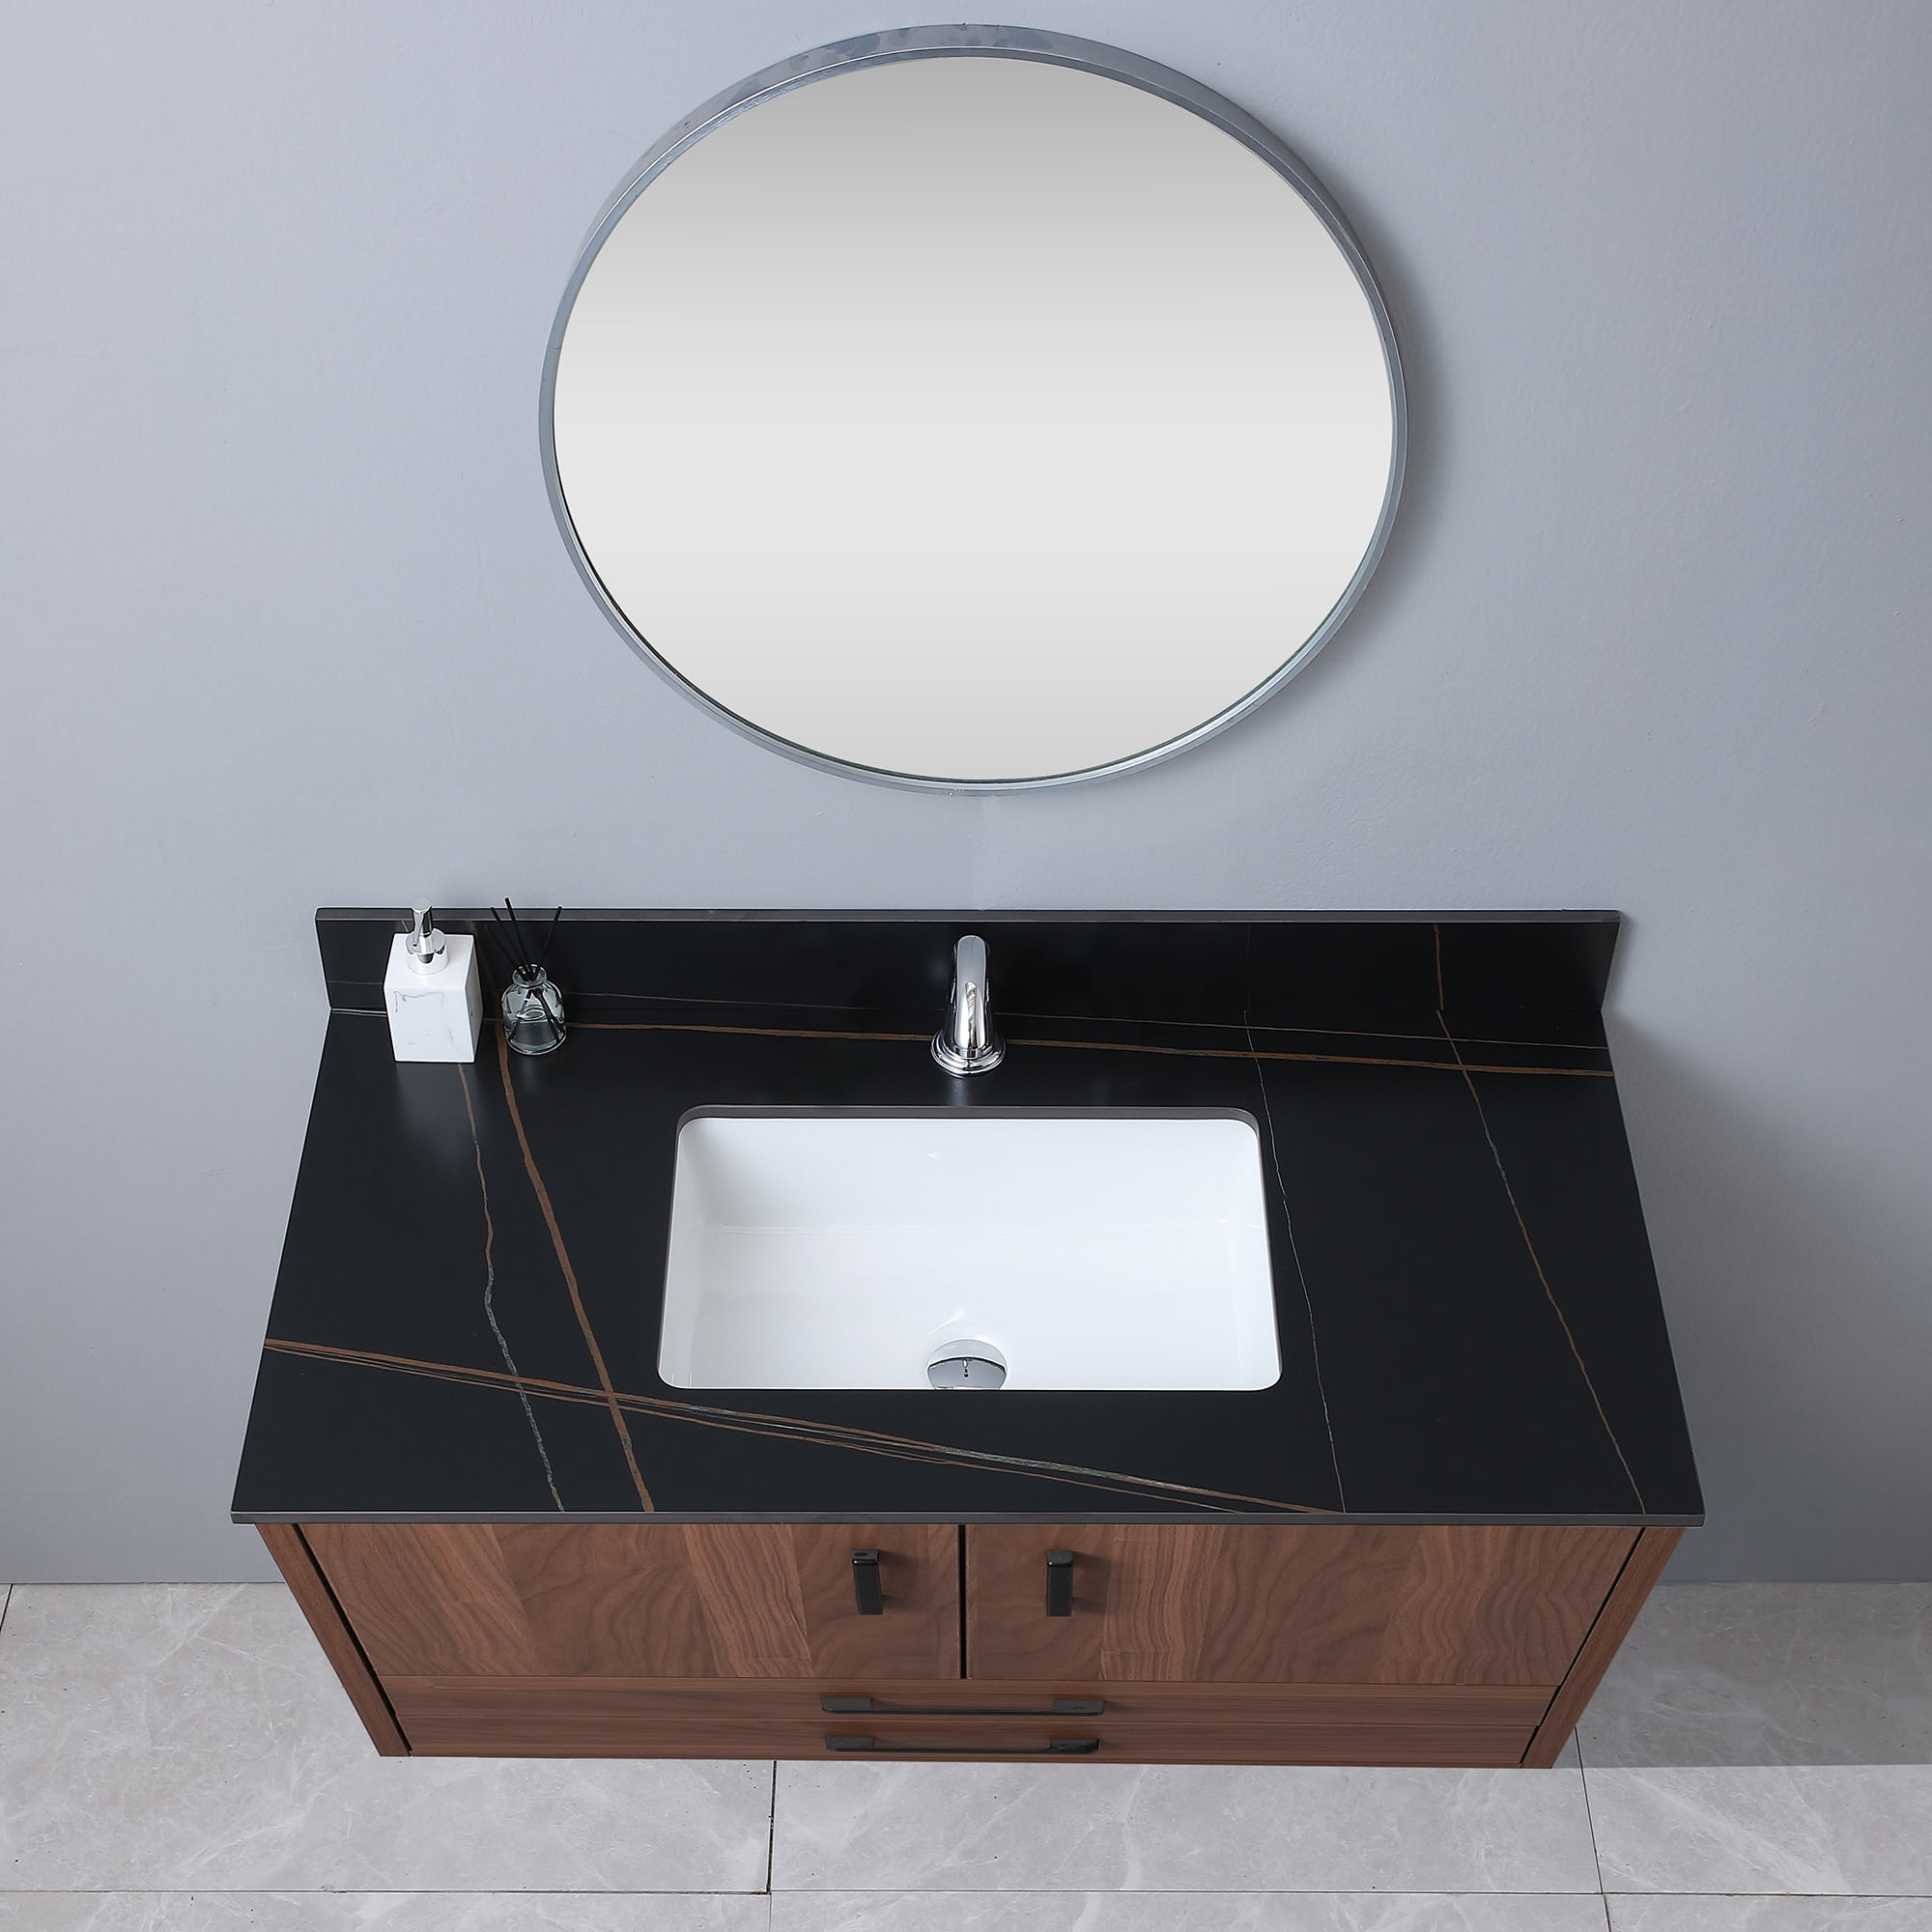 Leavader 43 Inches Black And Gold Sintered Stone Bathroom Vanity Top With Ceramic Basin And Backsplash Single Faucet Hole Cabinet Not Included 2886dda8 5f43 4453 B804 B9179c228e58.e6adde3b2b4525f088832f686610644e 